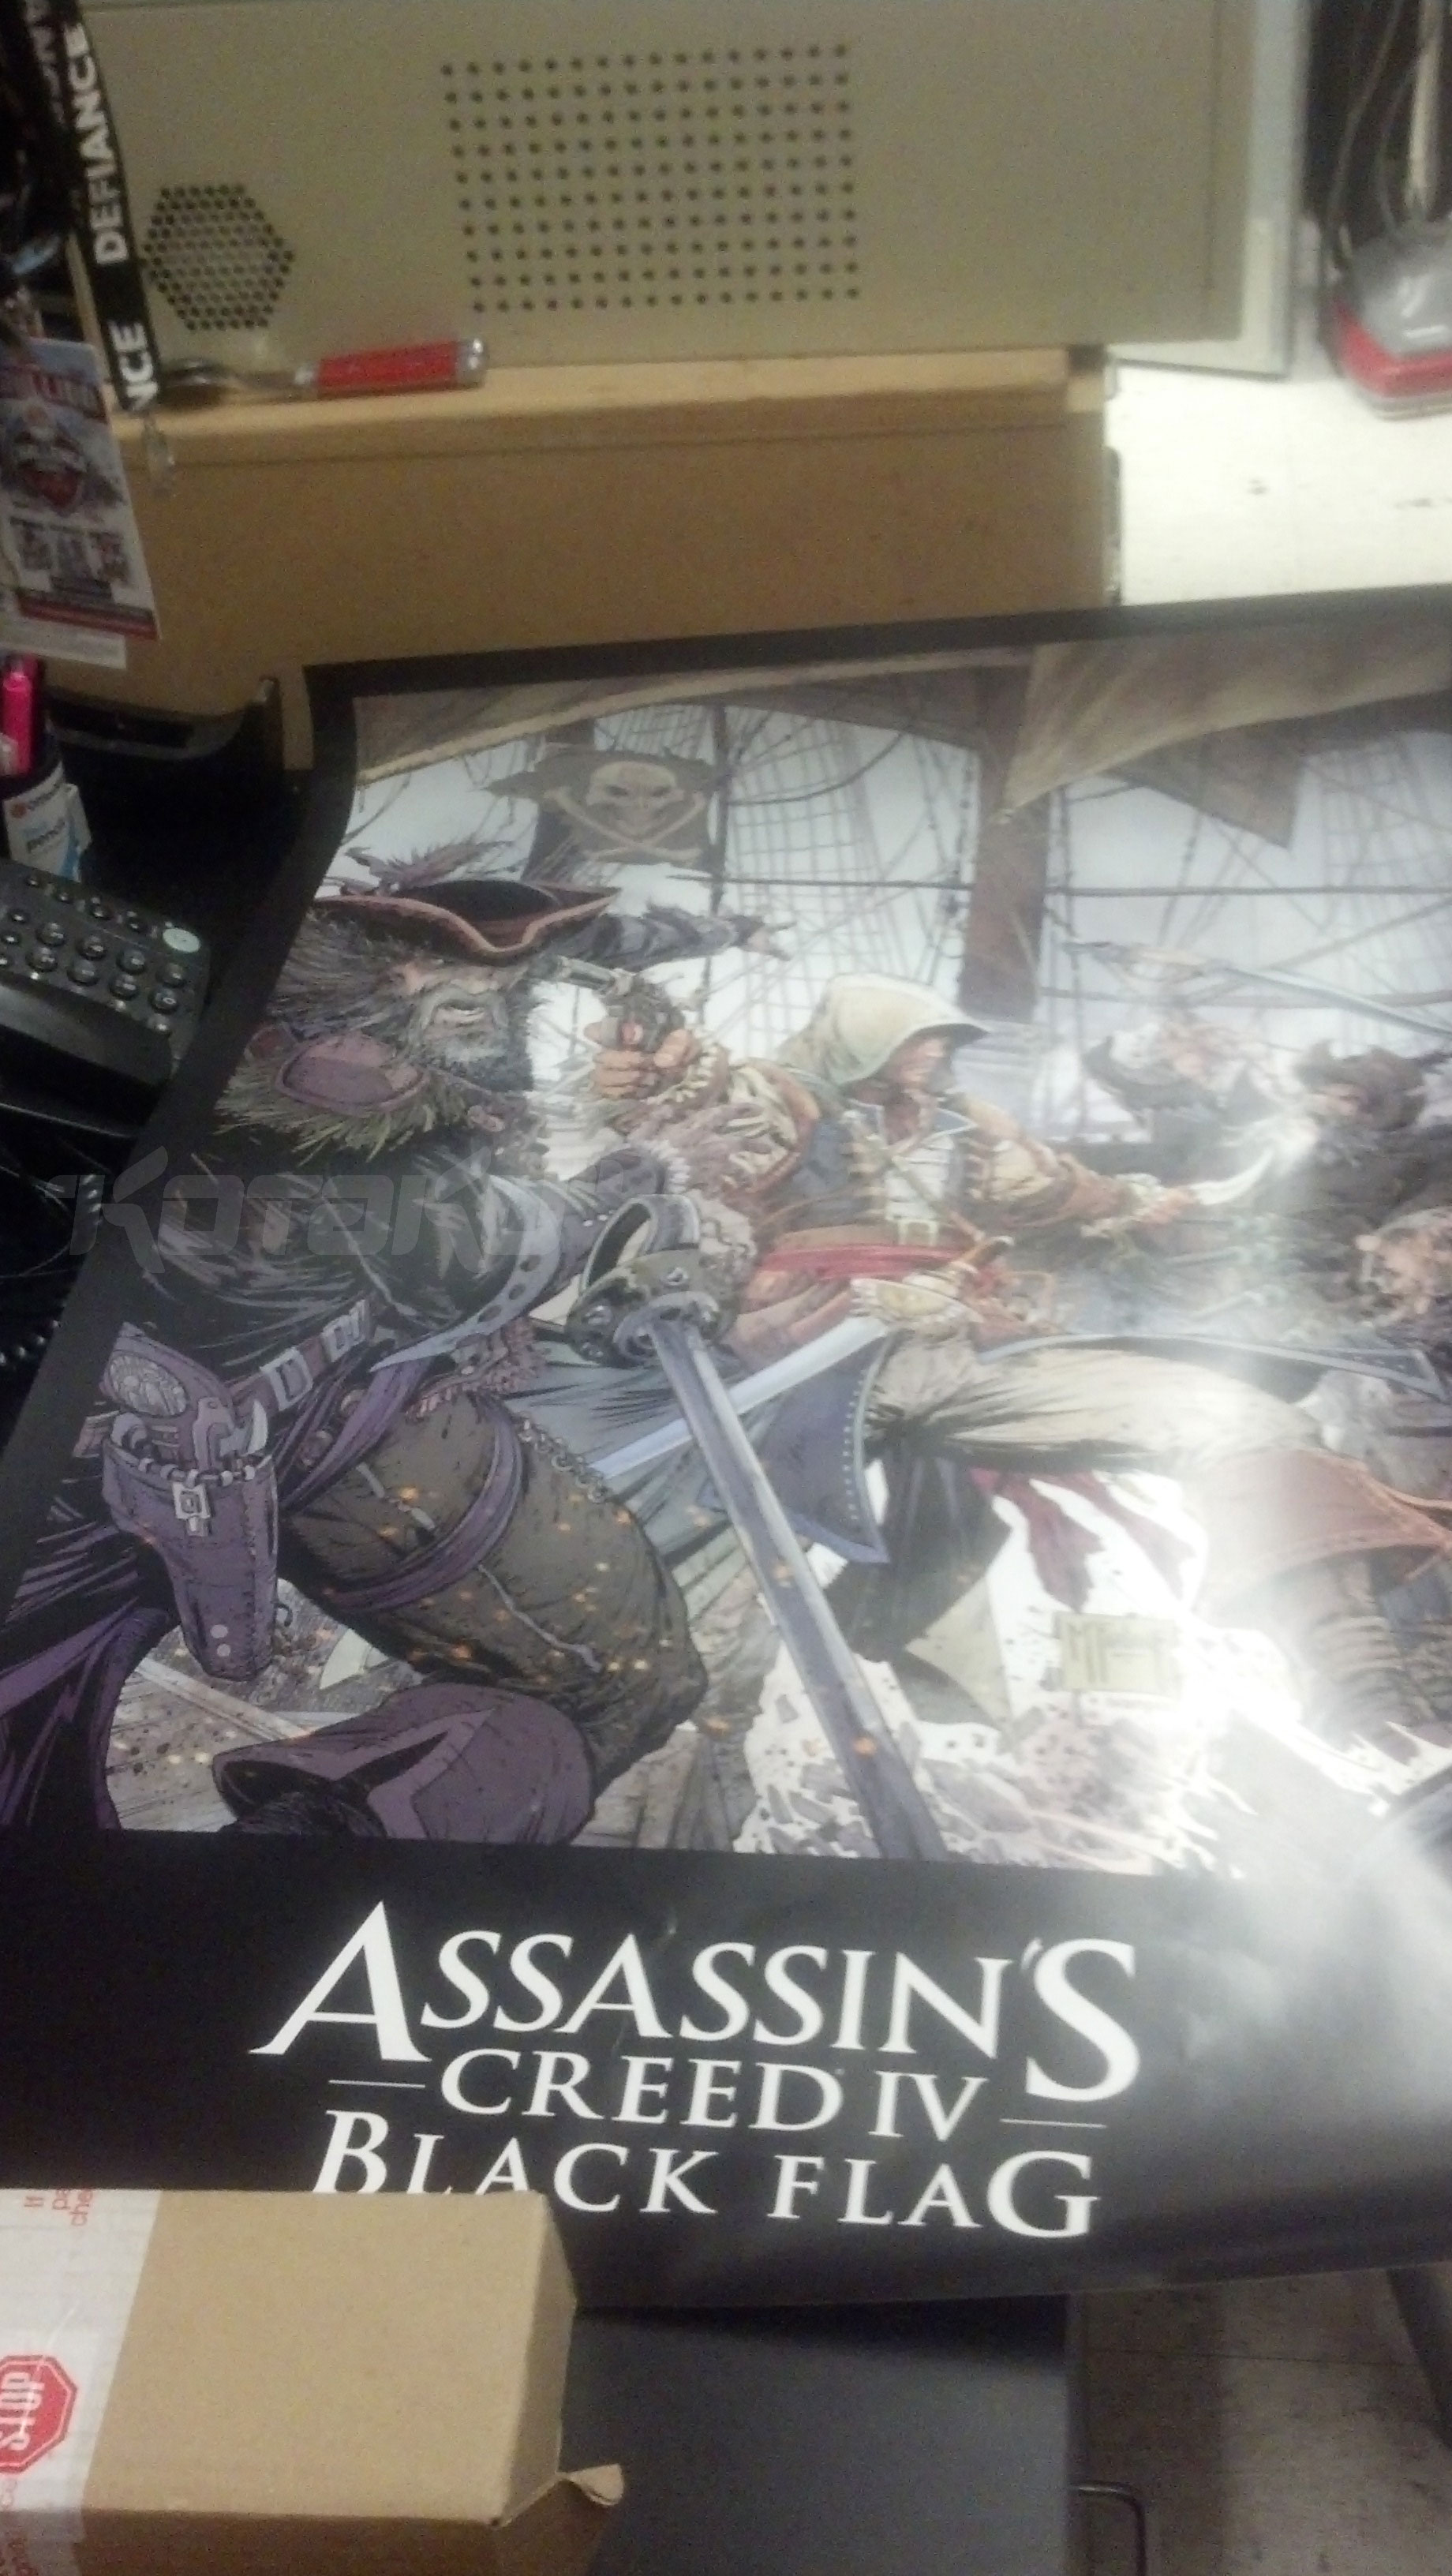 Poster for Assassin's Creed IV Black Flag